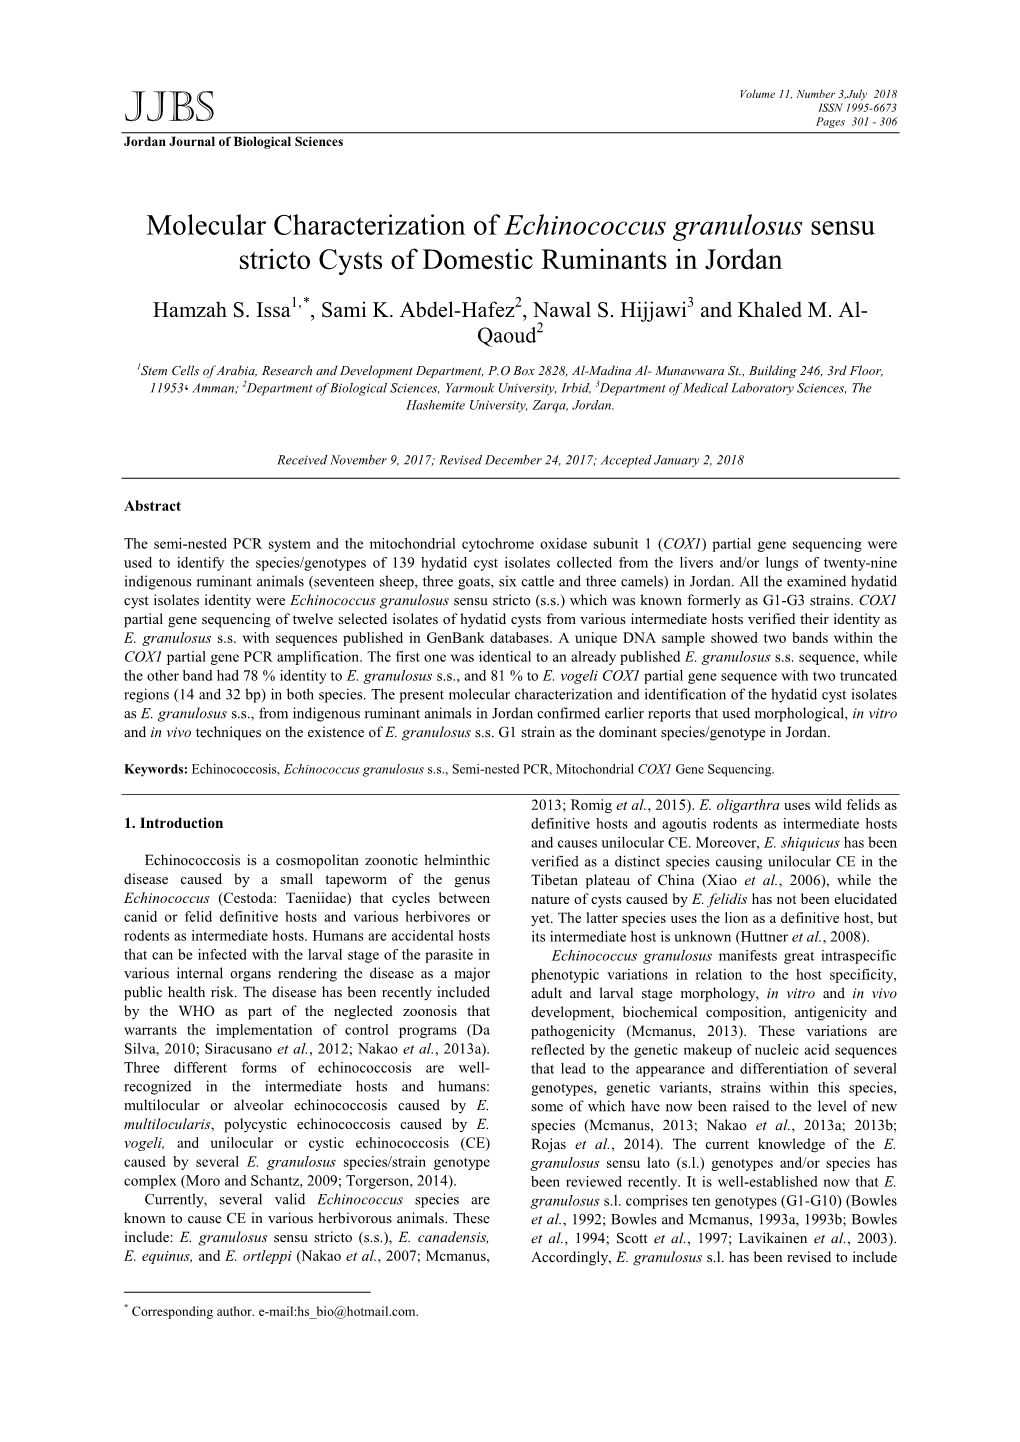 Molecular Characterization of Echinococcus Granulosus Sensu Stricto Cysts of Domestic Ruminants in Jordan